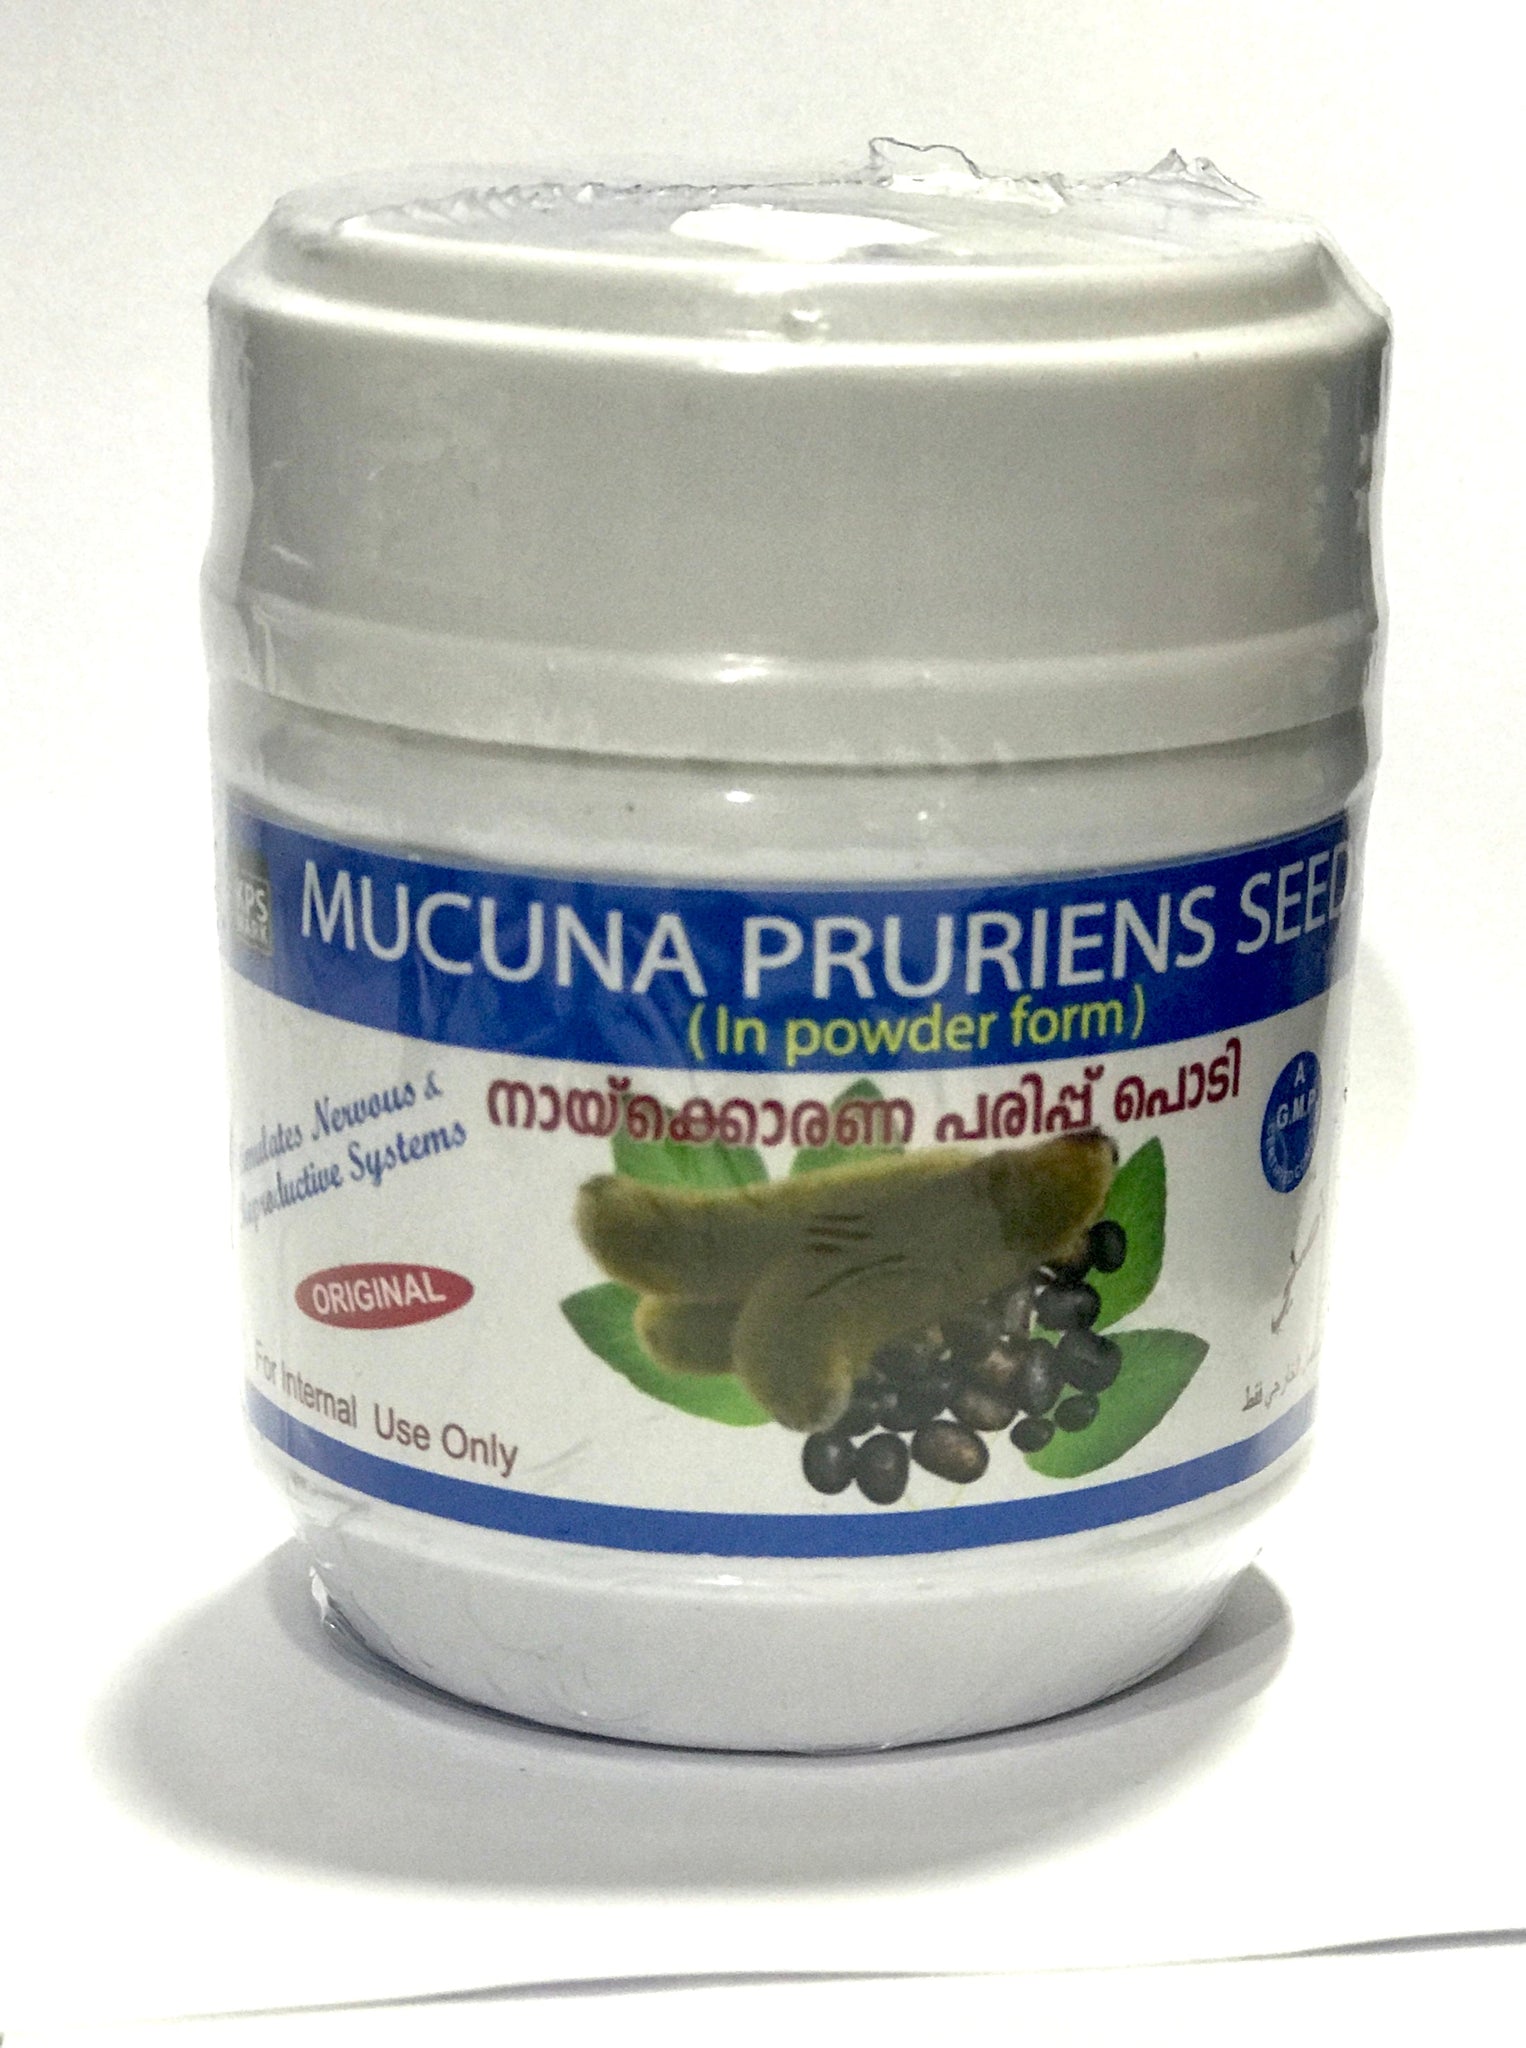 Mucuna Pruriens powder form 50g Value Pack of 2 